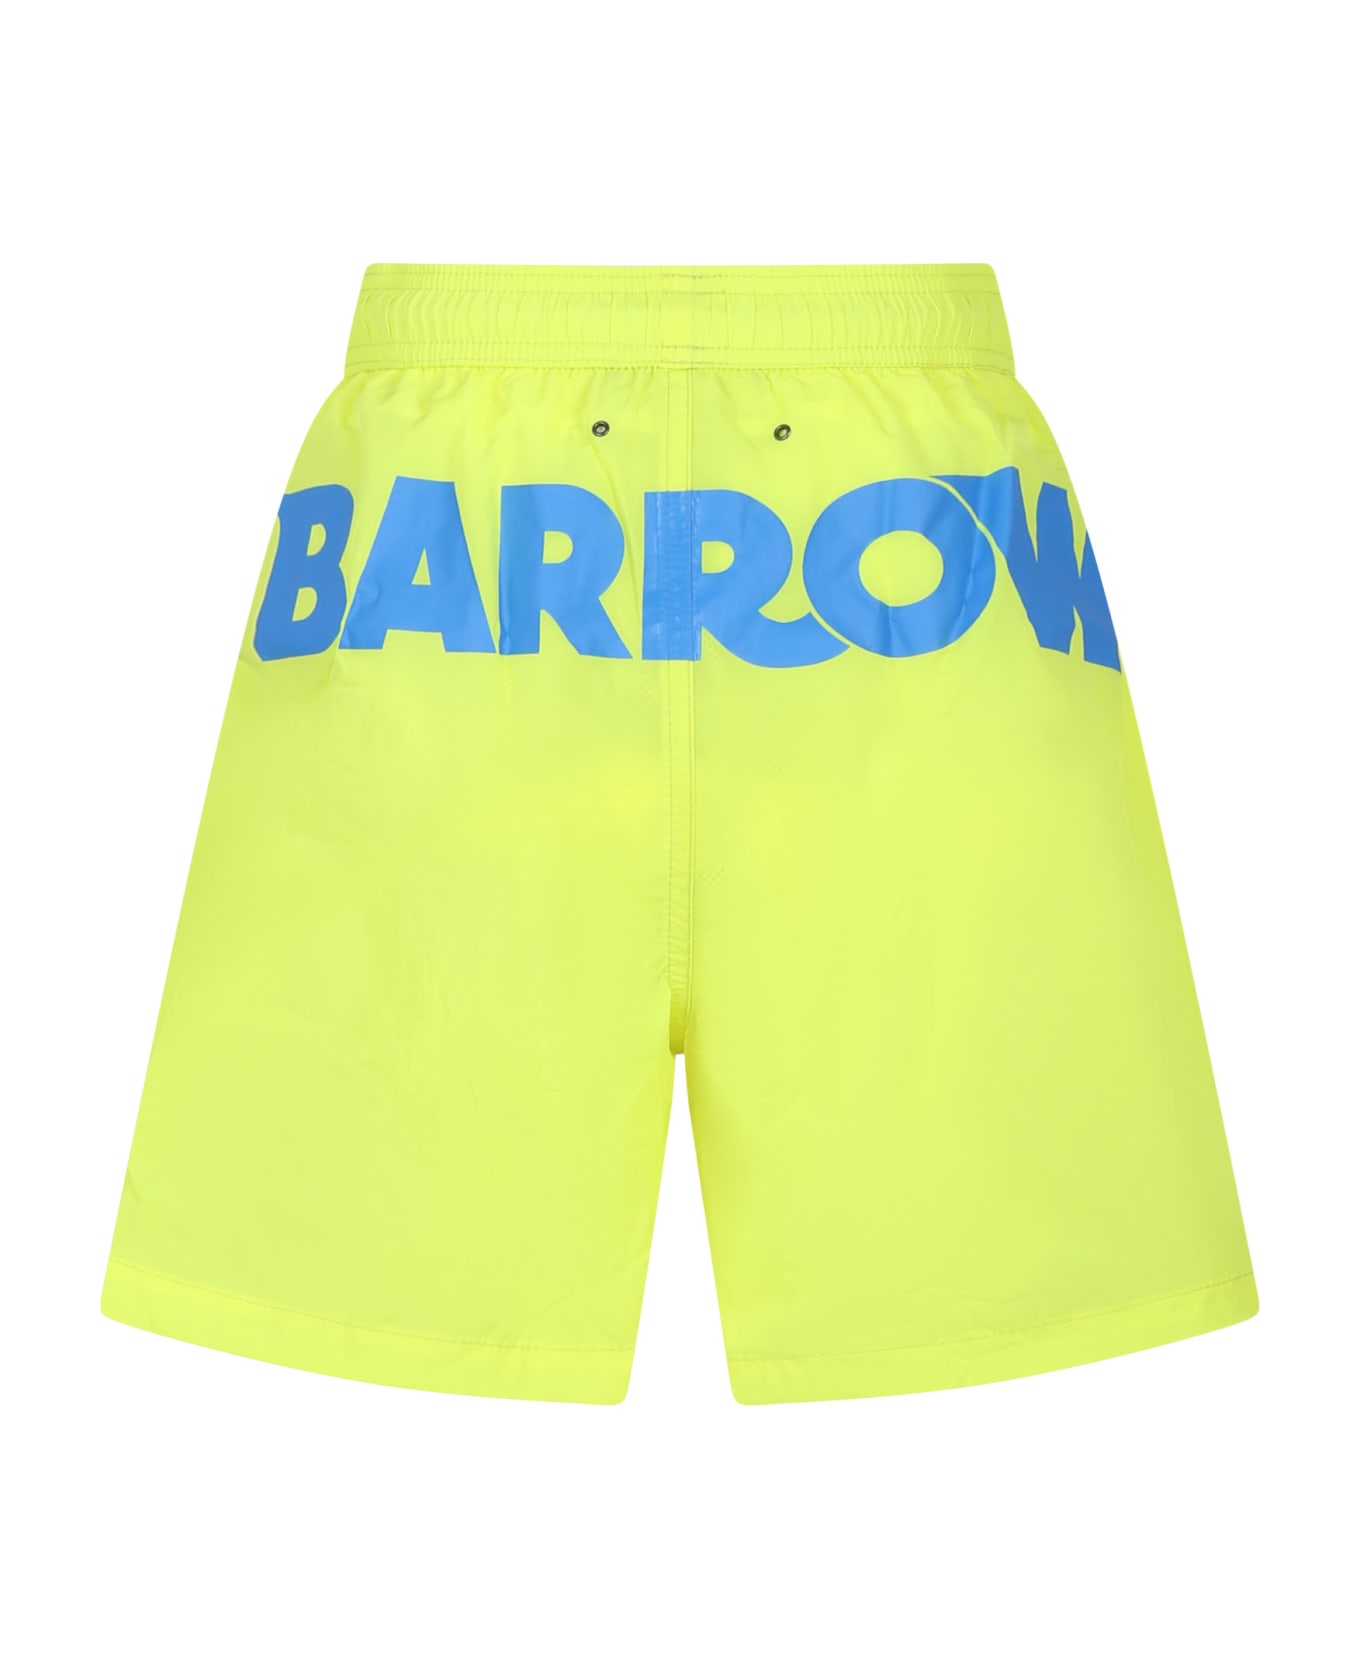 Barrow Yellow Swim Shorts For Boy With Smiley - Yellow 水着